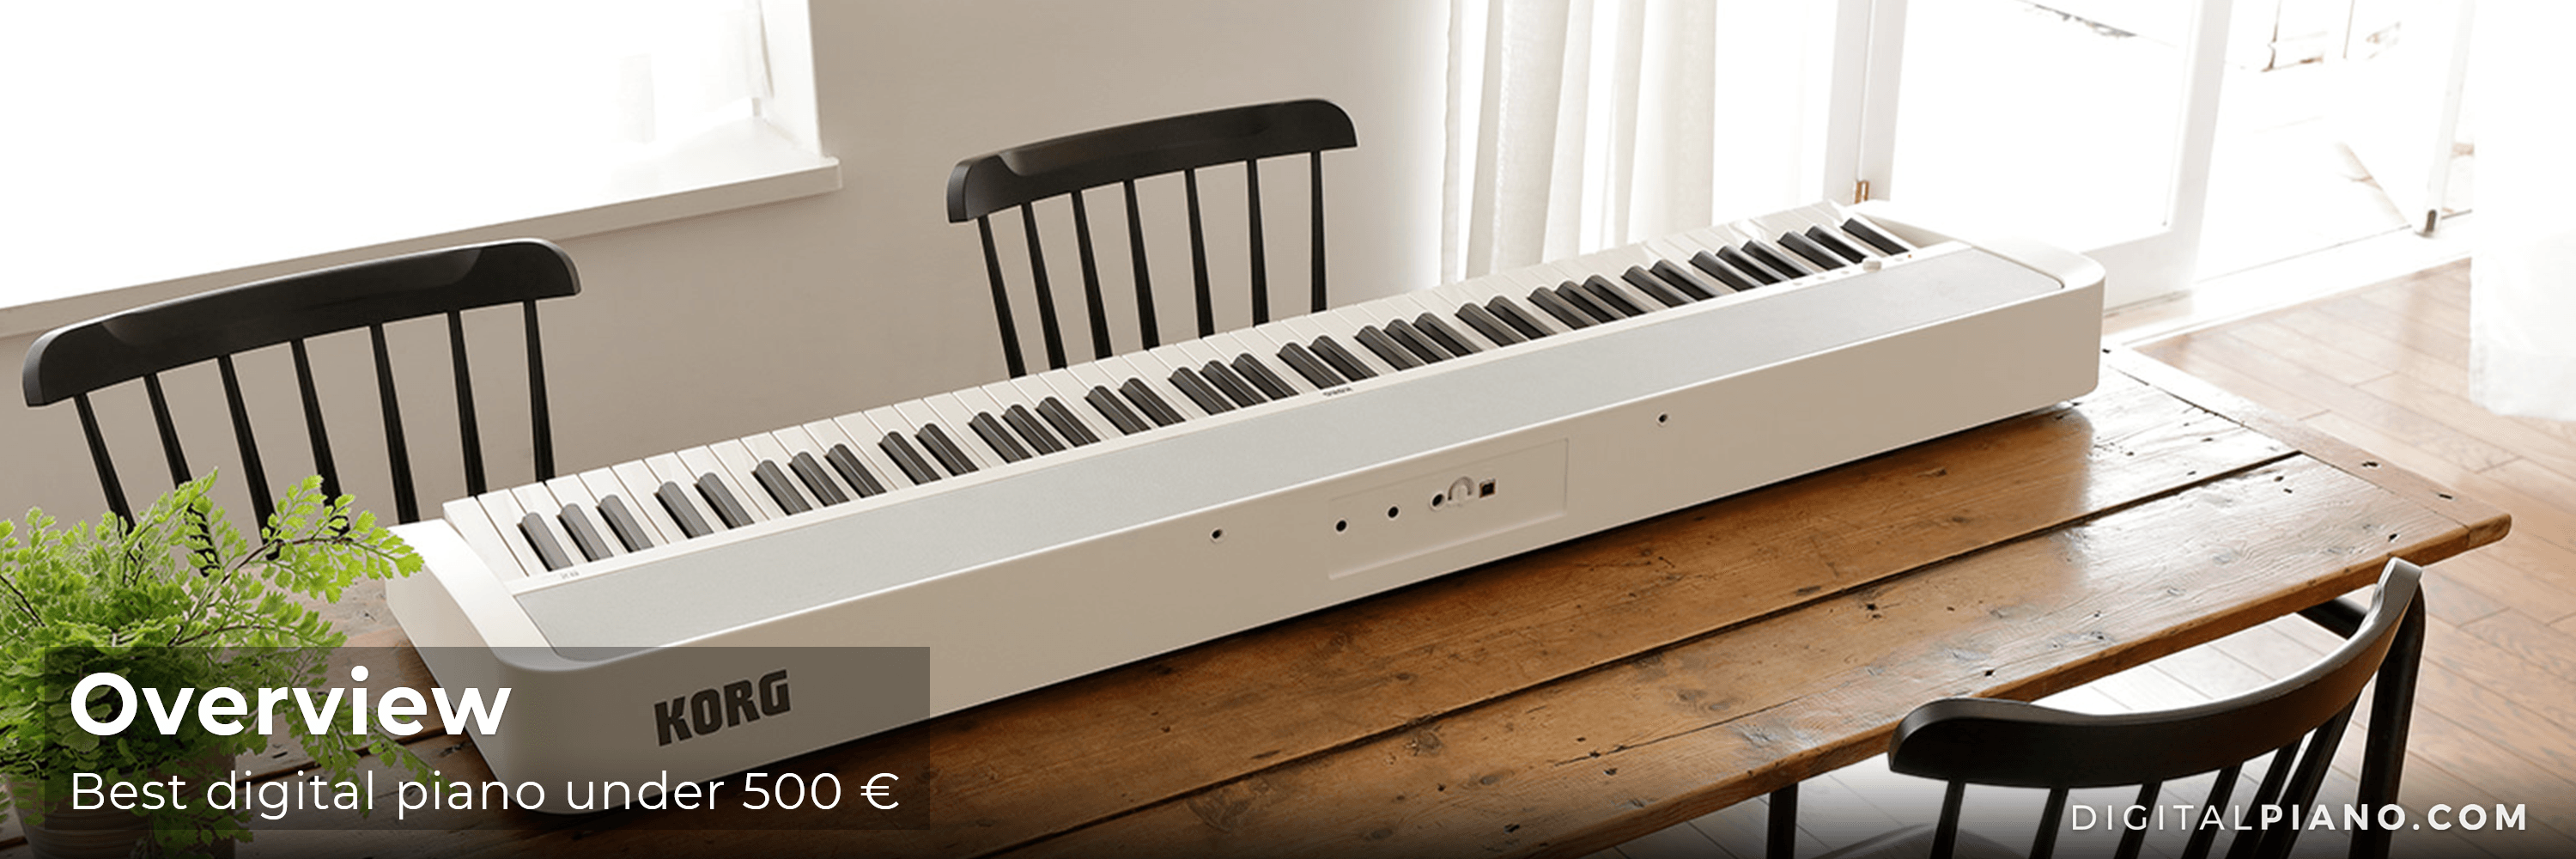 Best Beginner Digital Pianos under 500 euros 